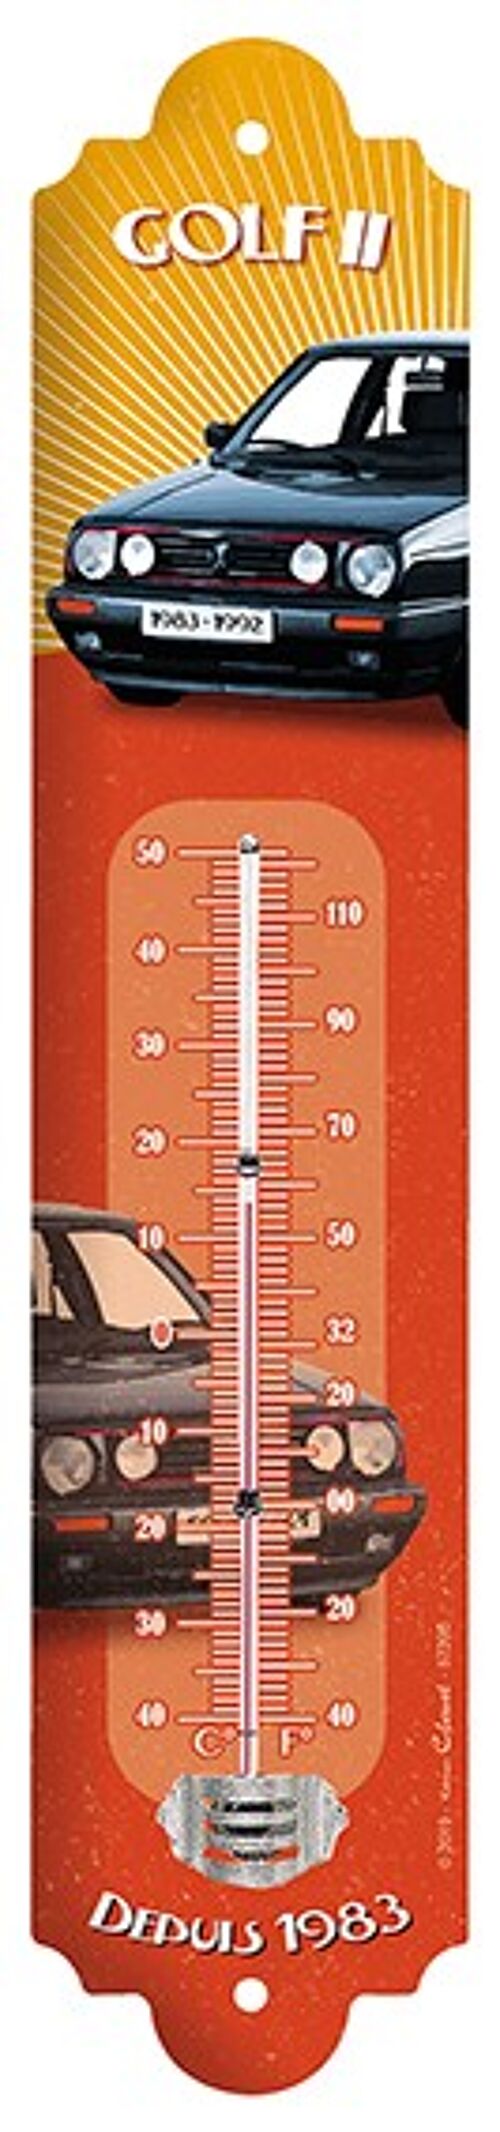 Golf ii thermometre